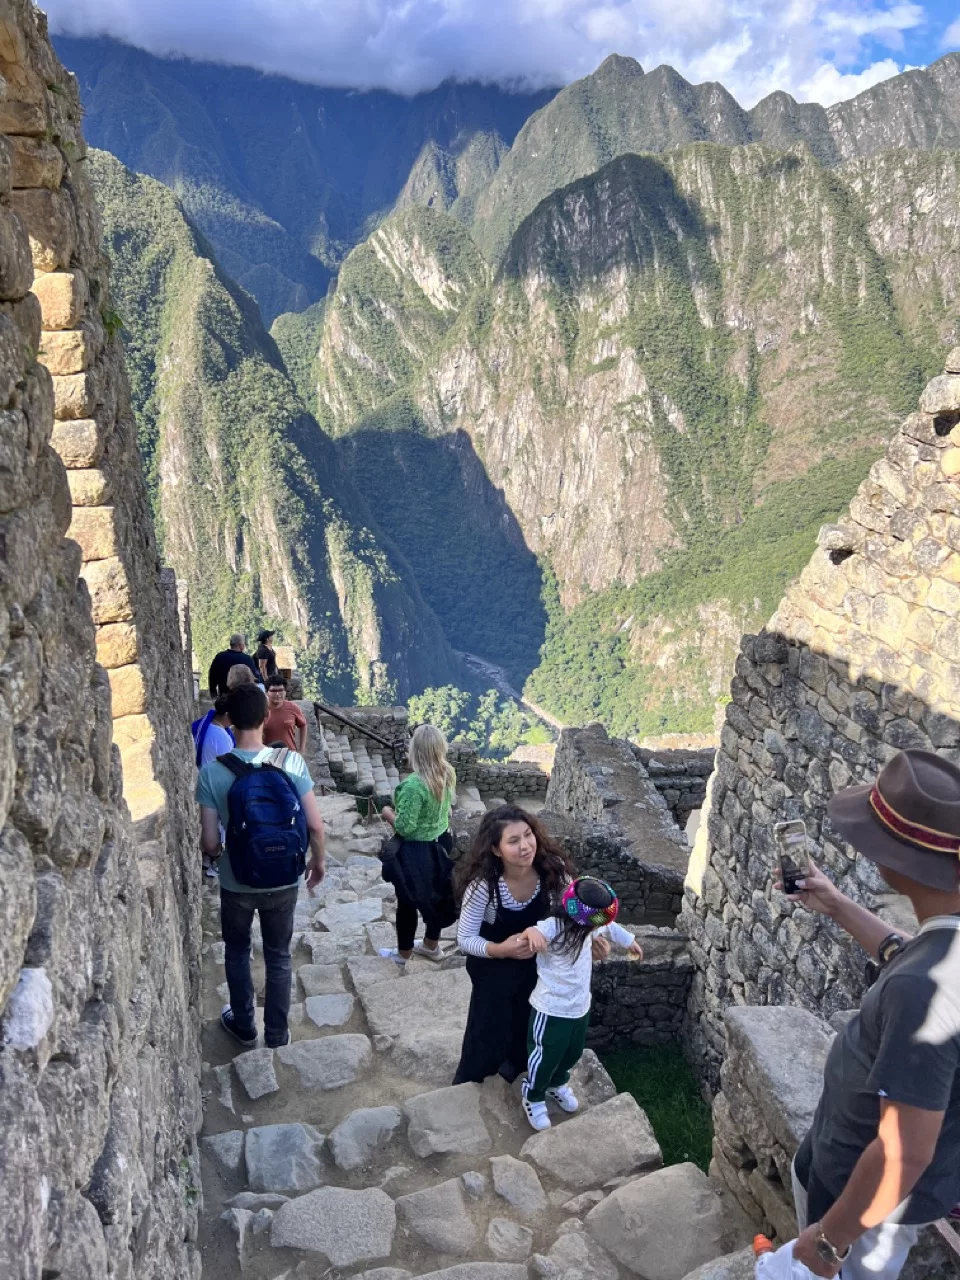 Walking around Machu Picchu